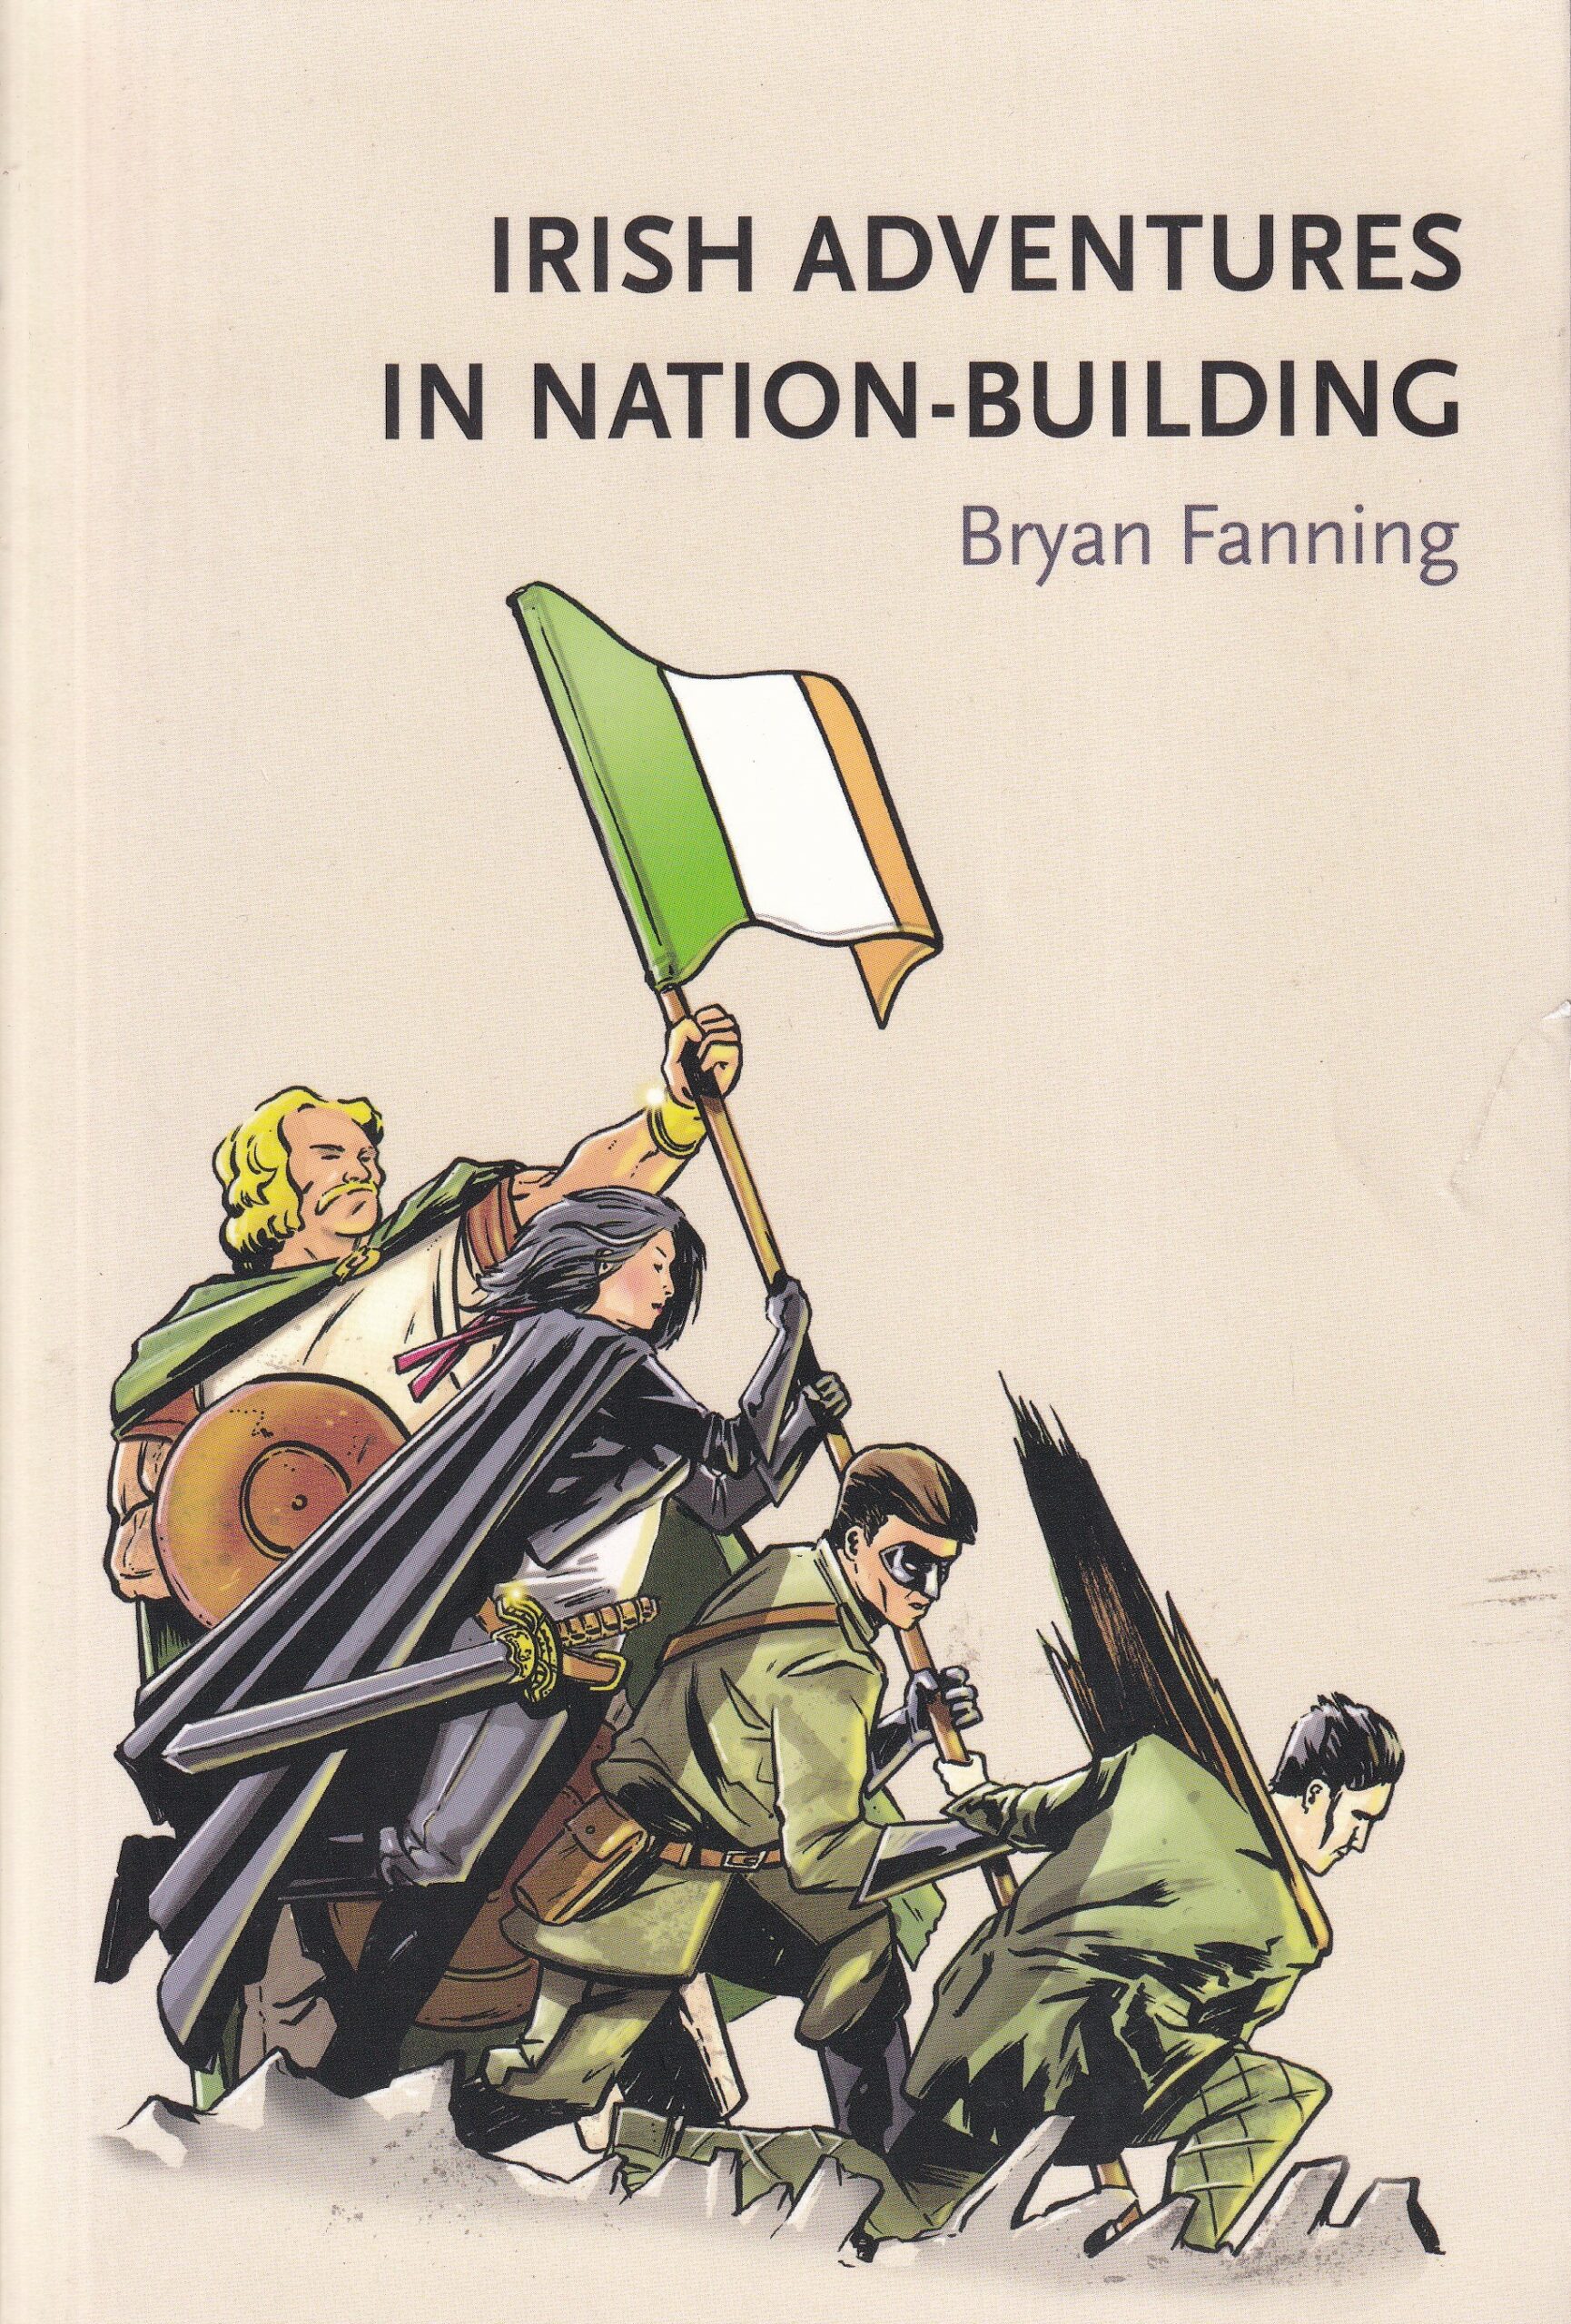 Irish adventures in nation building by Bryan Fanning